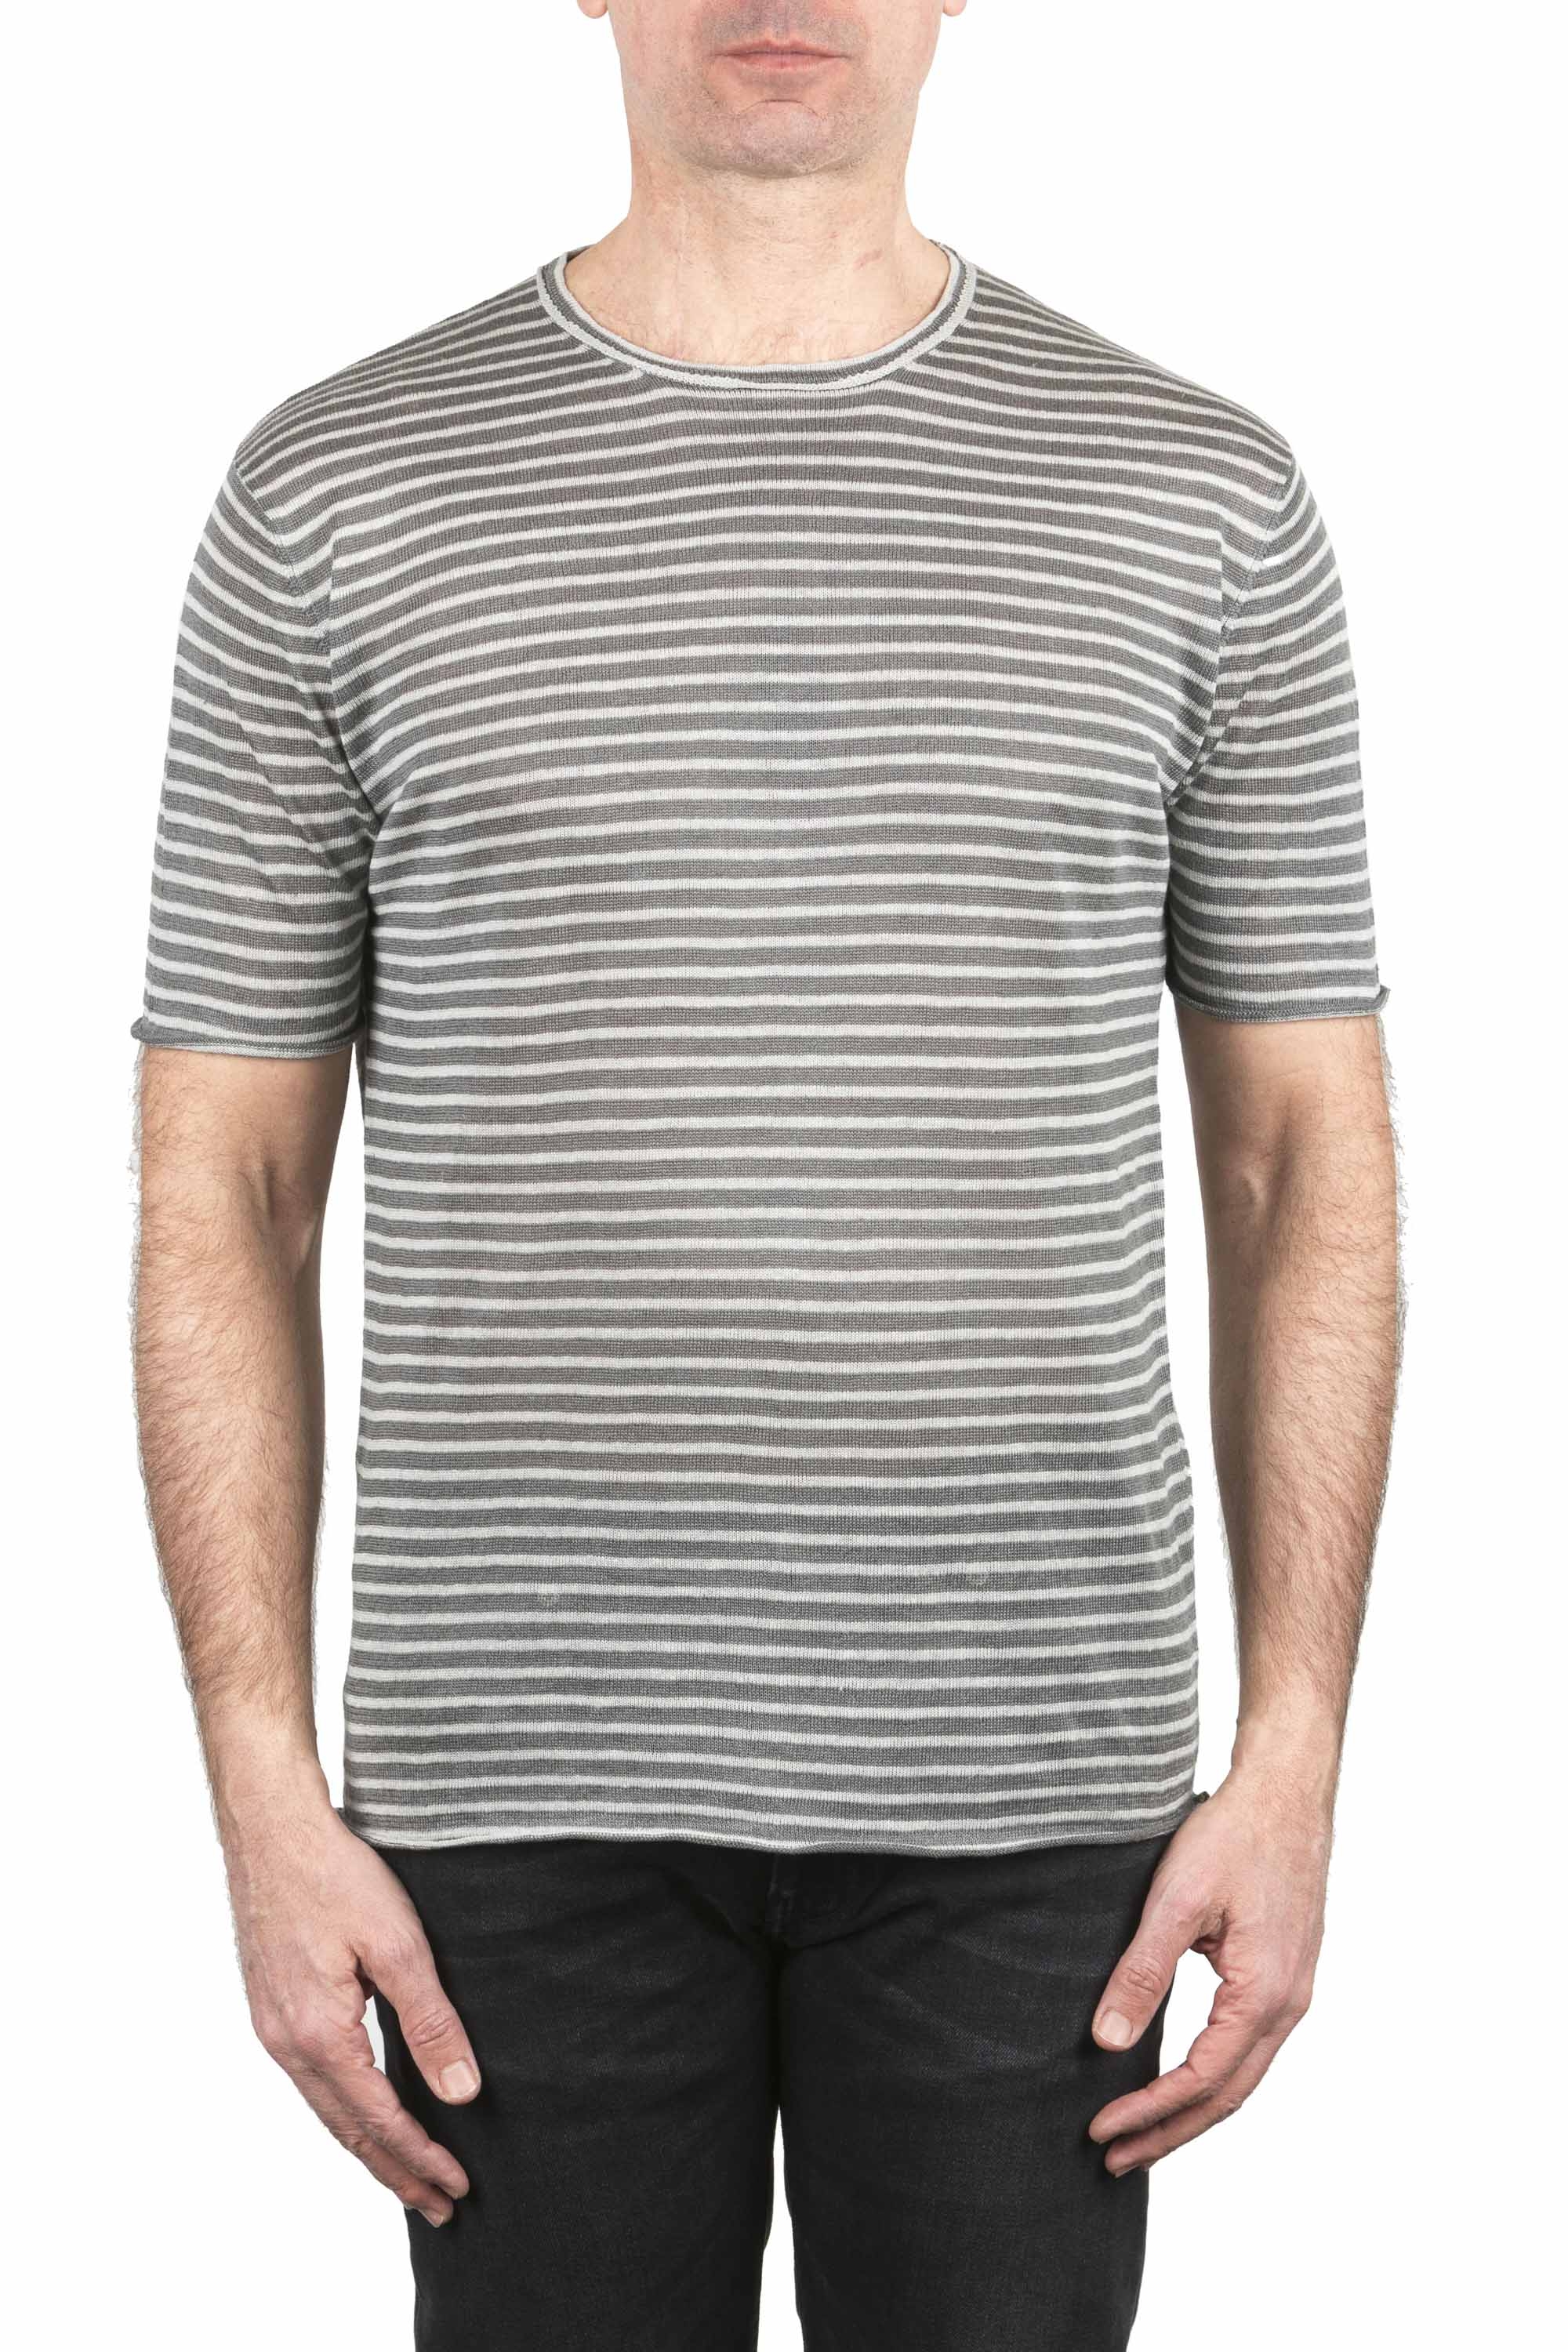 SBU 03930_2022SS Linen striped t-shirt white and grey 01